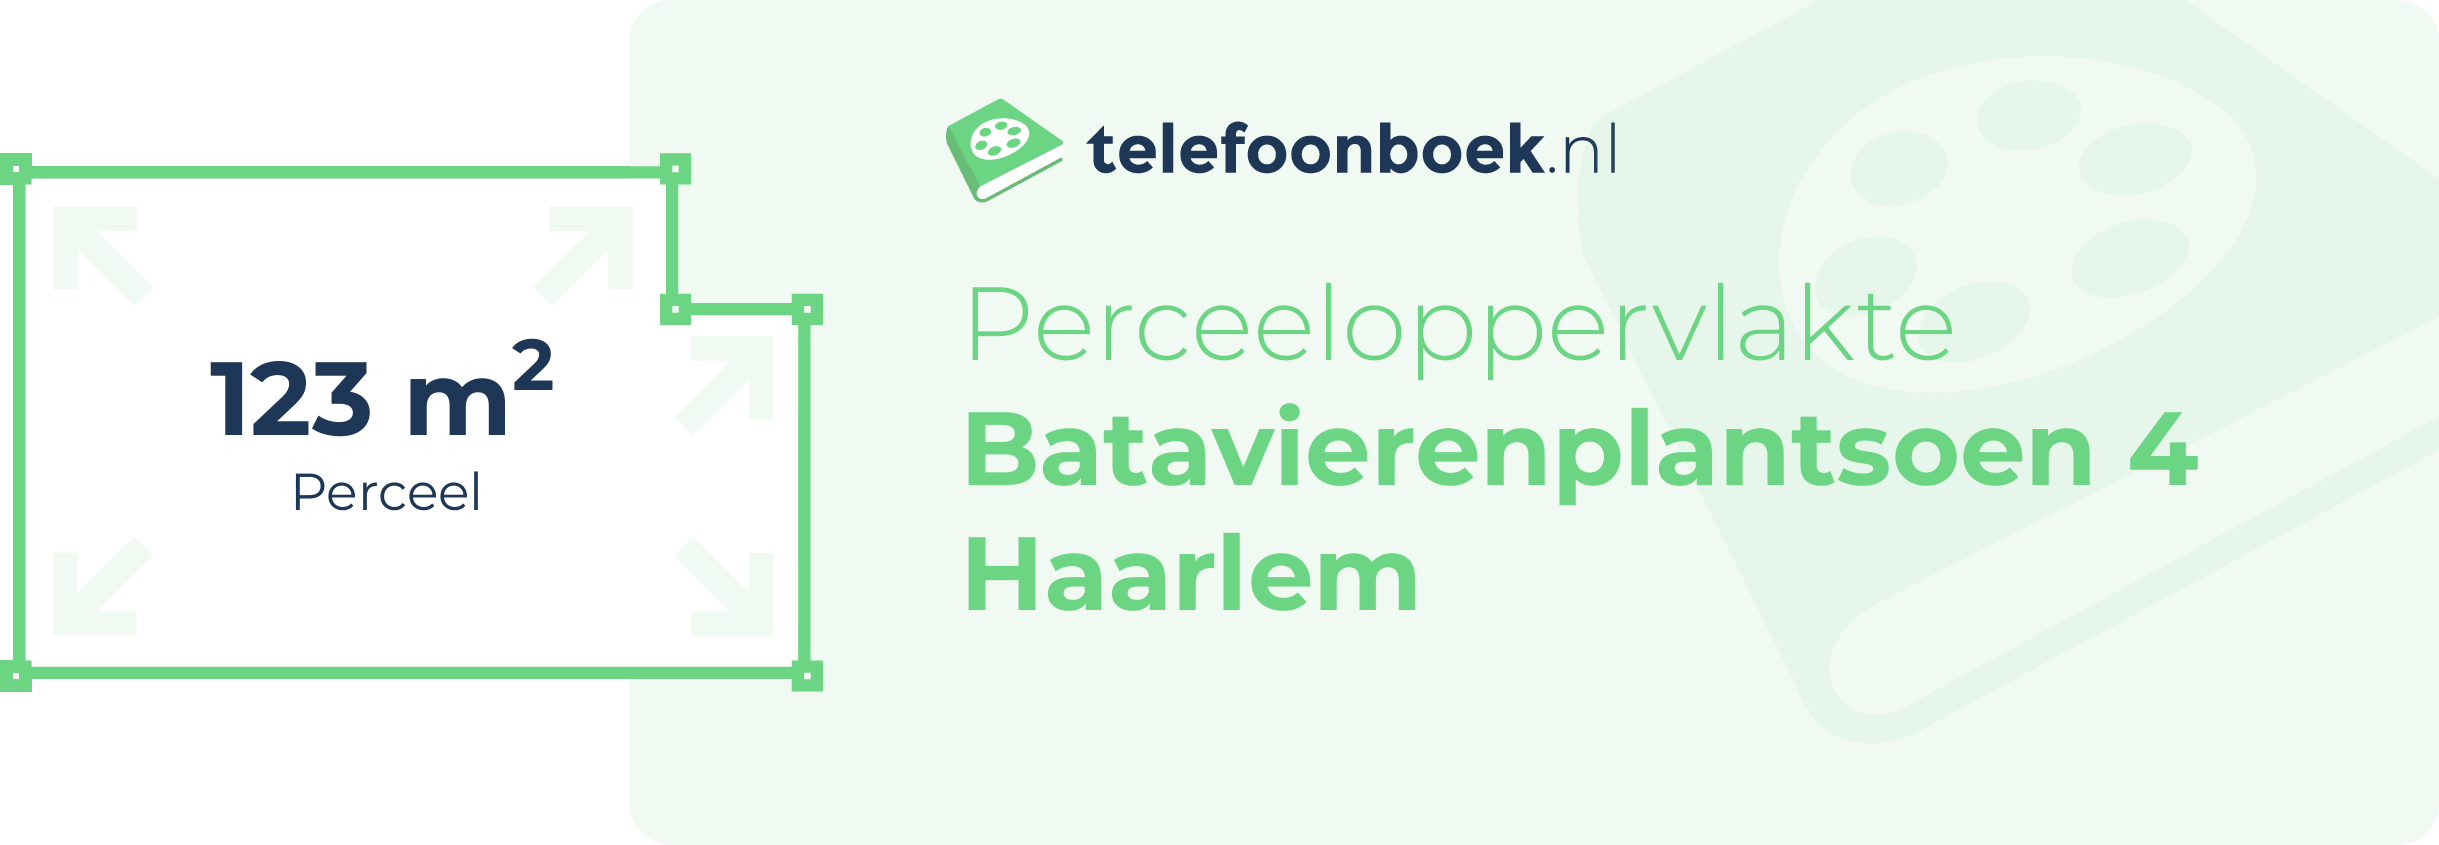 Perceeloppervlakte Batavierenplantsoen 4 Haarlem